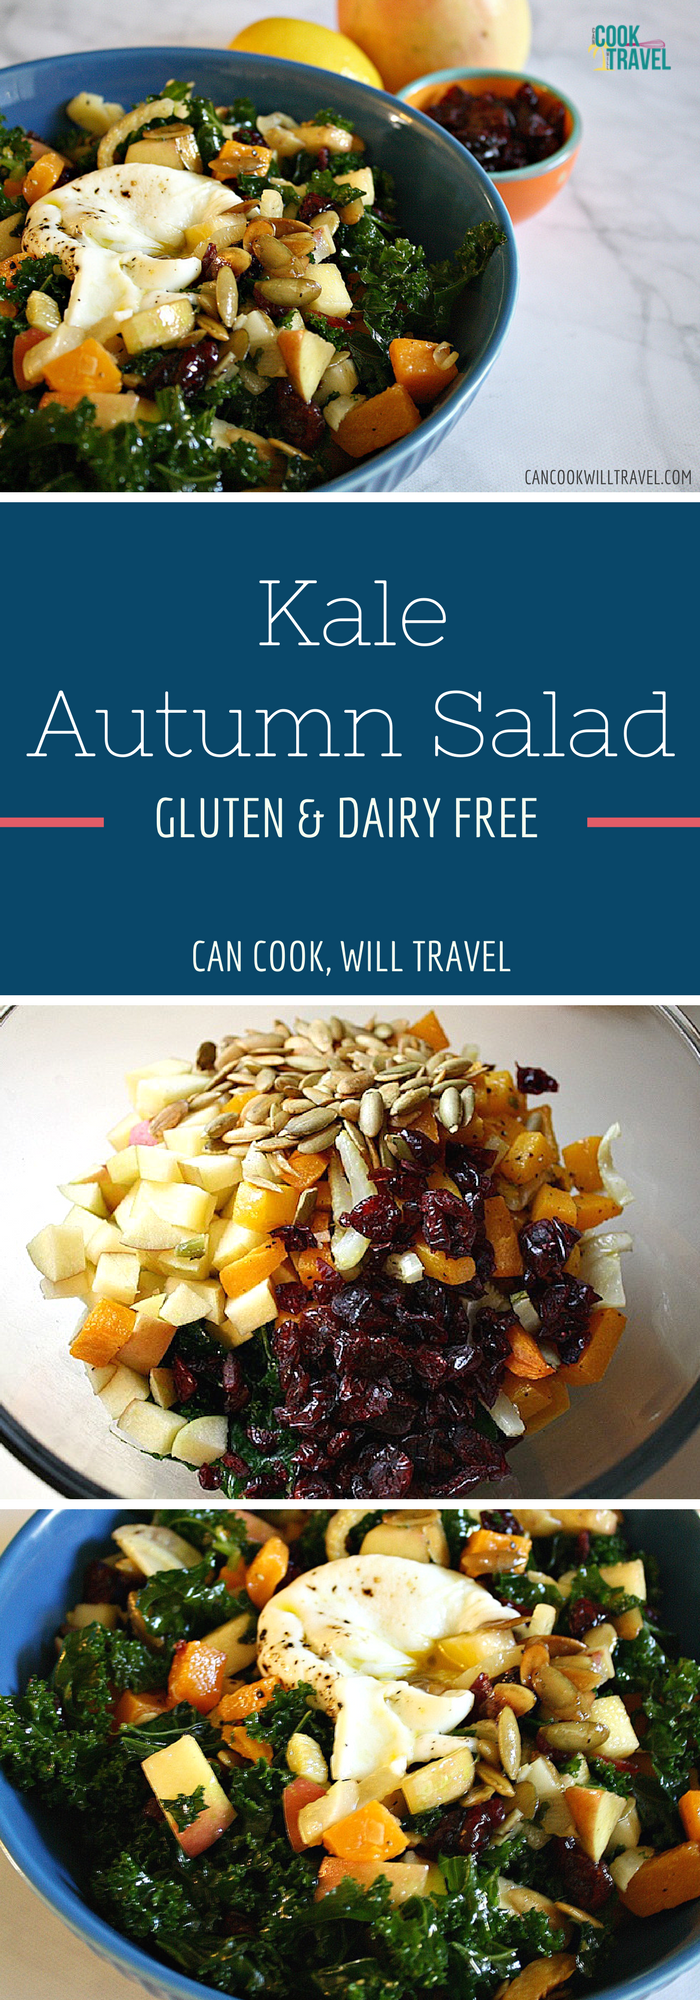 Kale Autumn Salad_Collage2